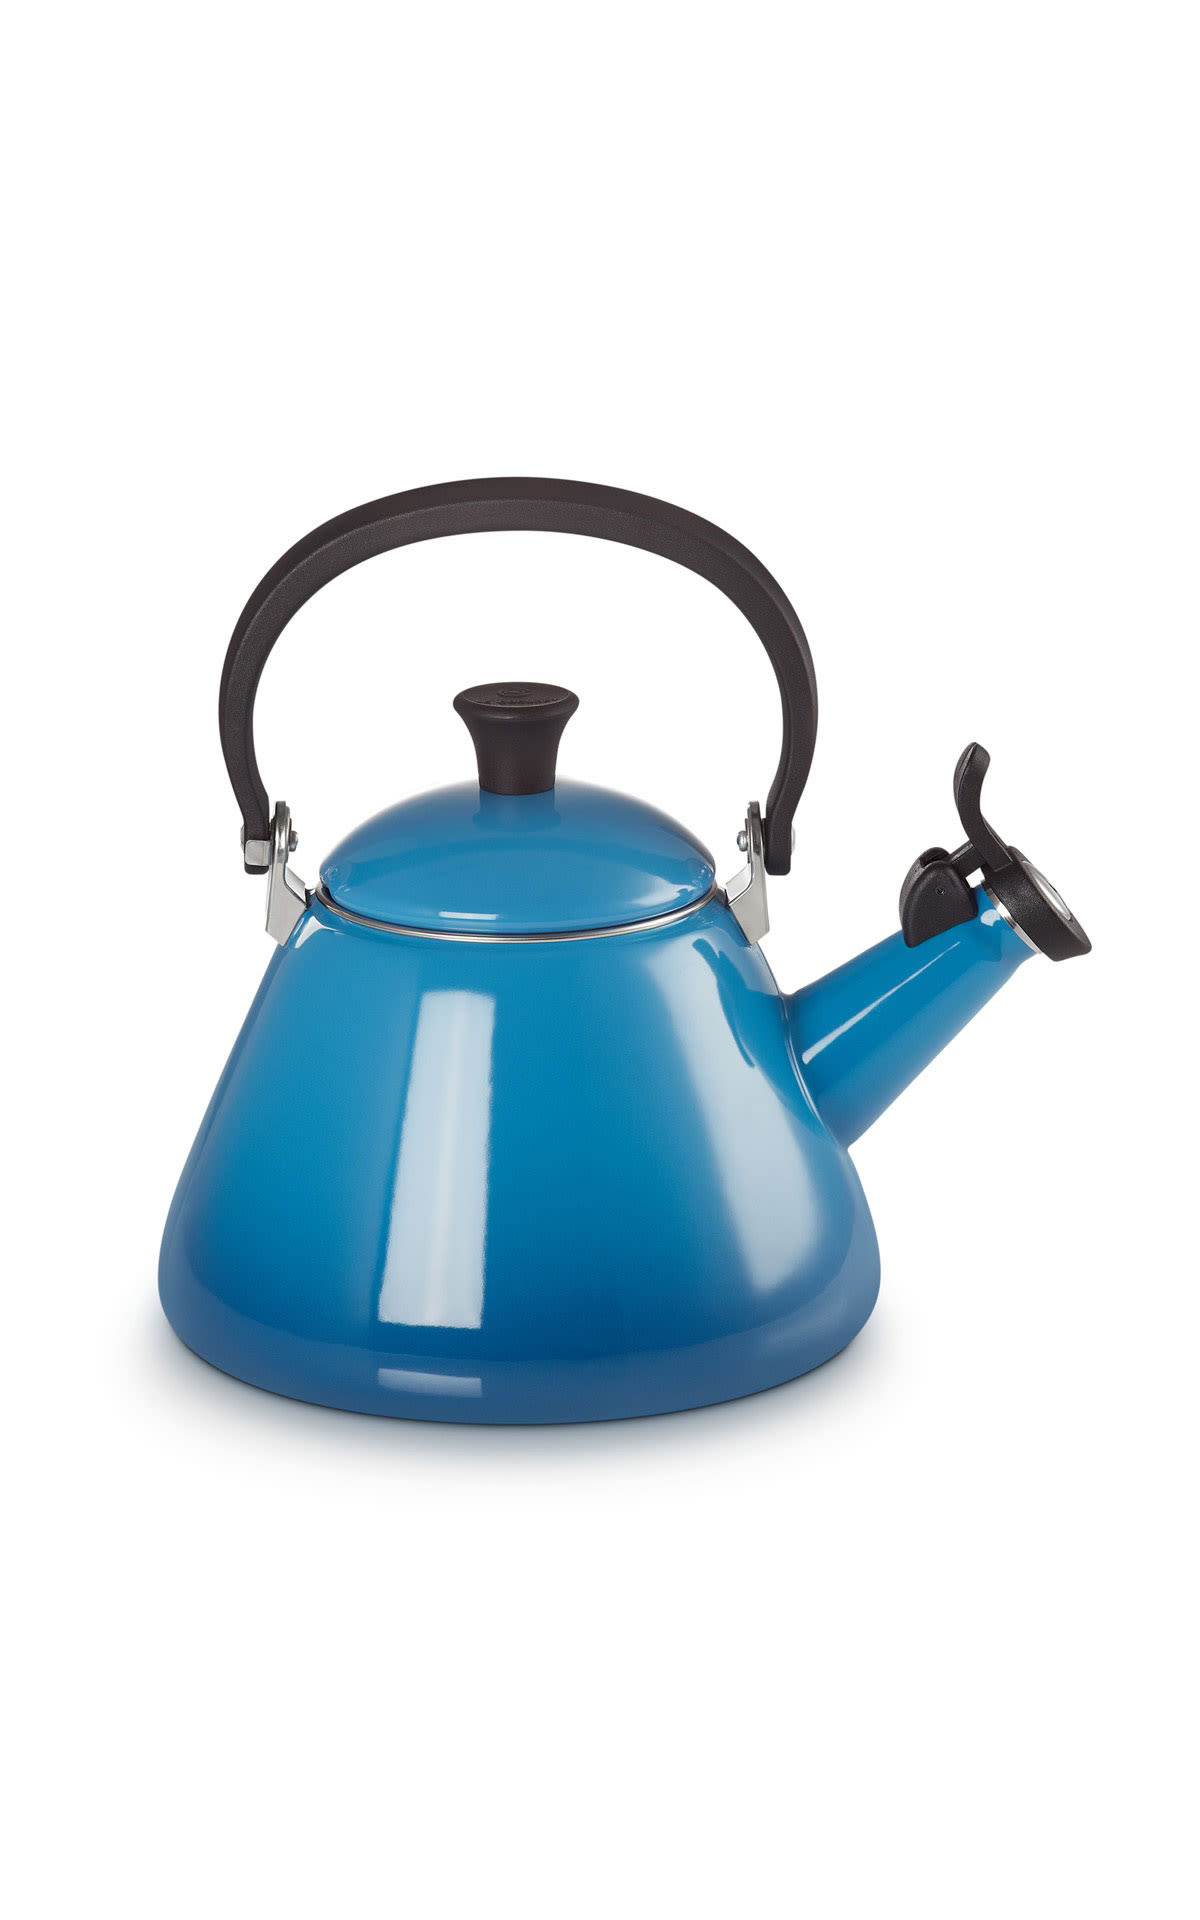 Le Creuset Kone kettle from Bicester Village